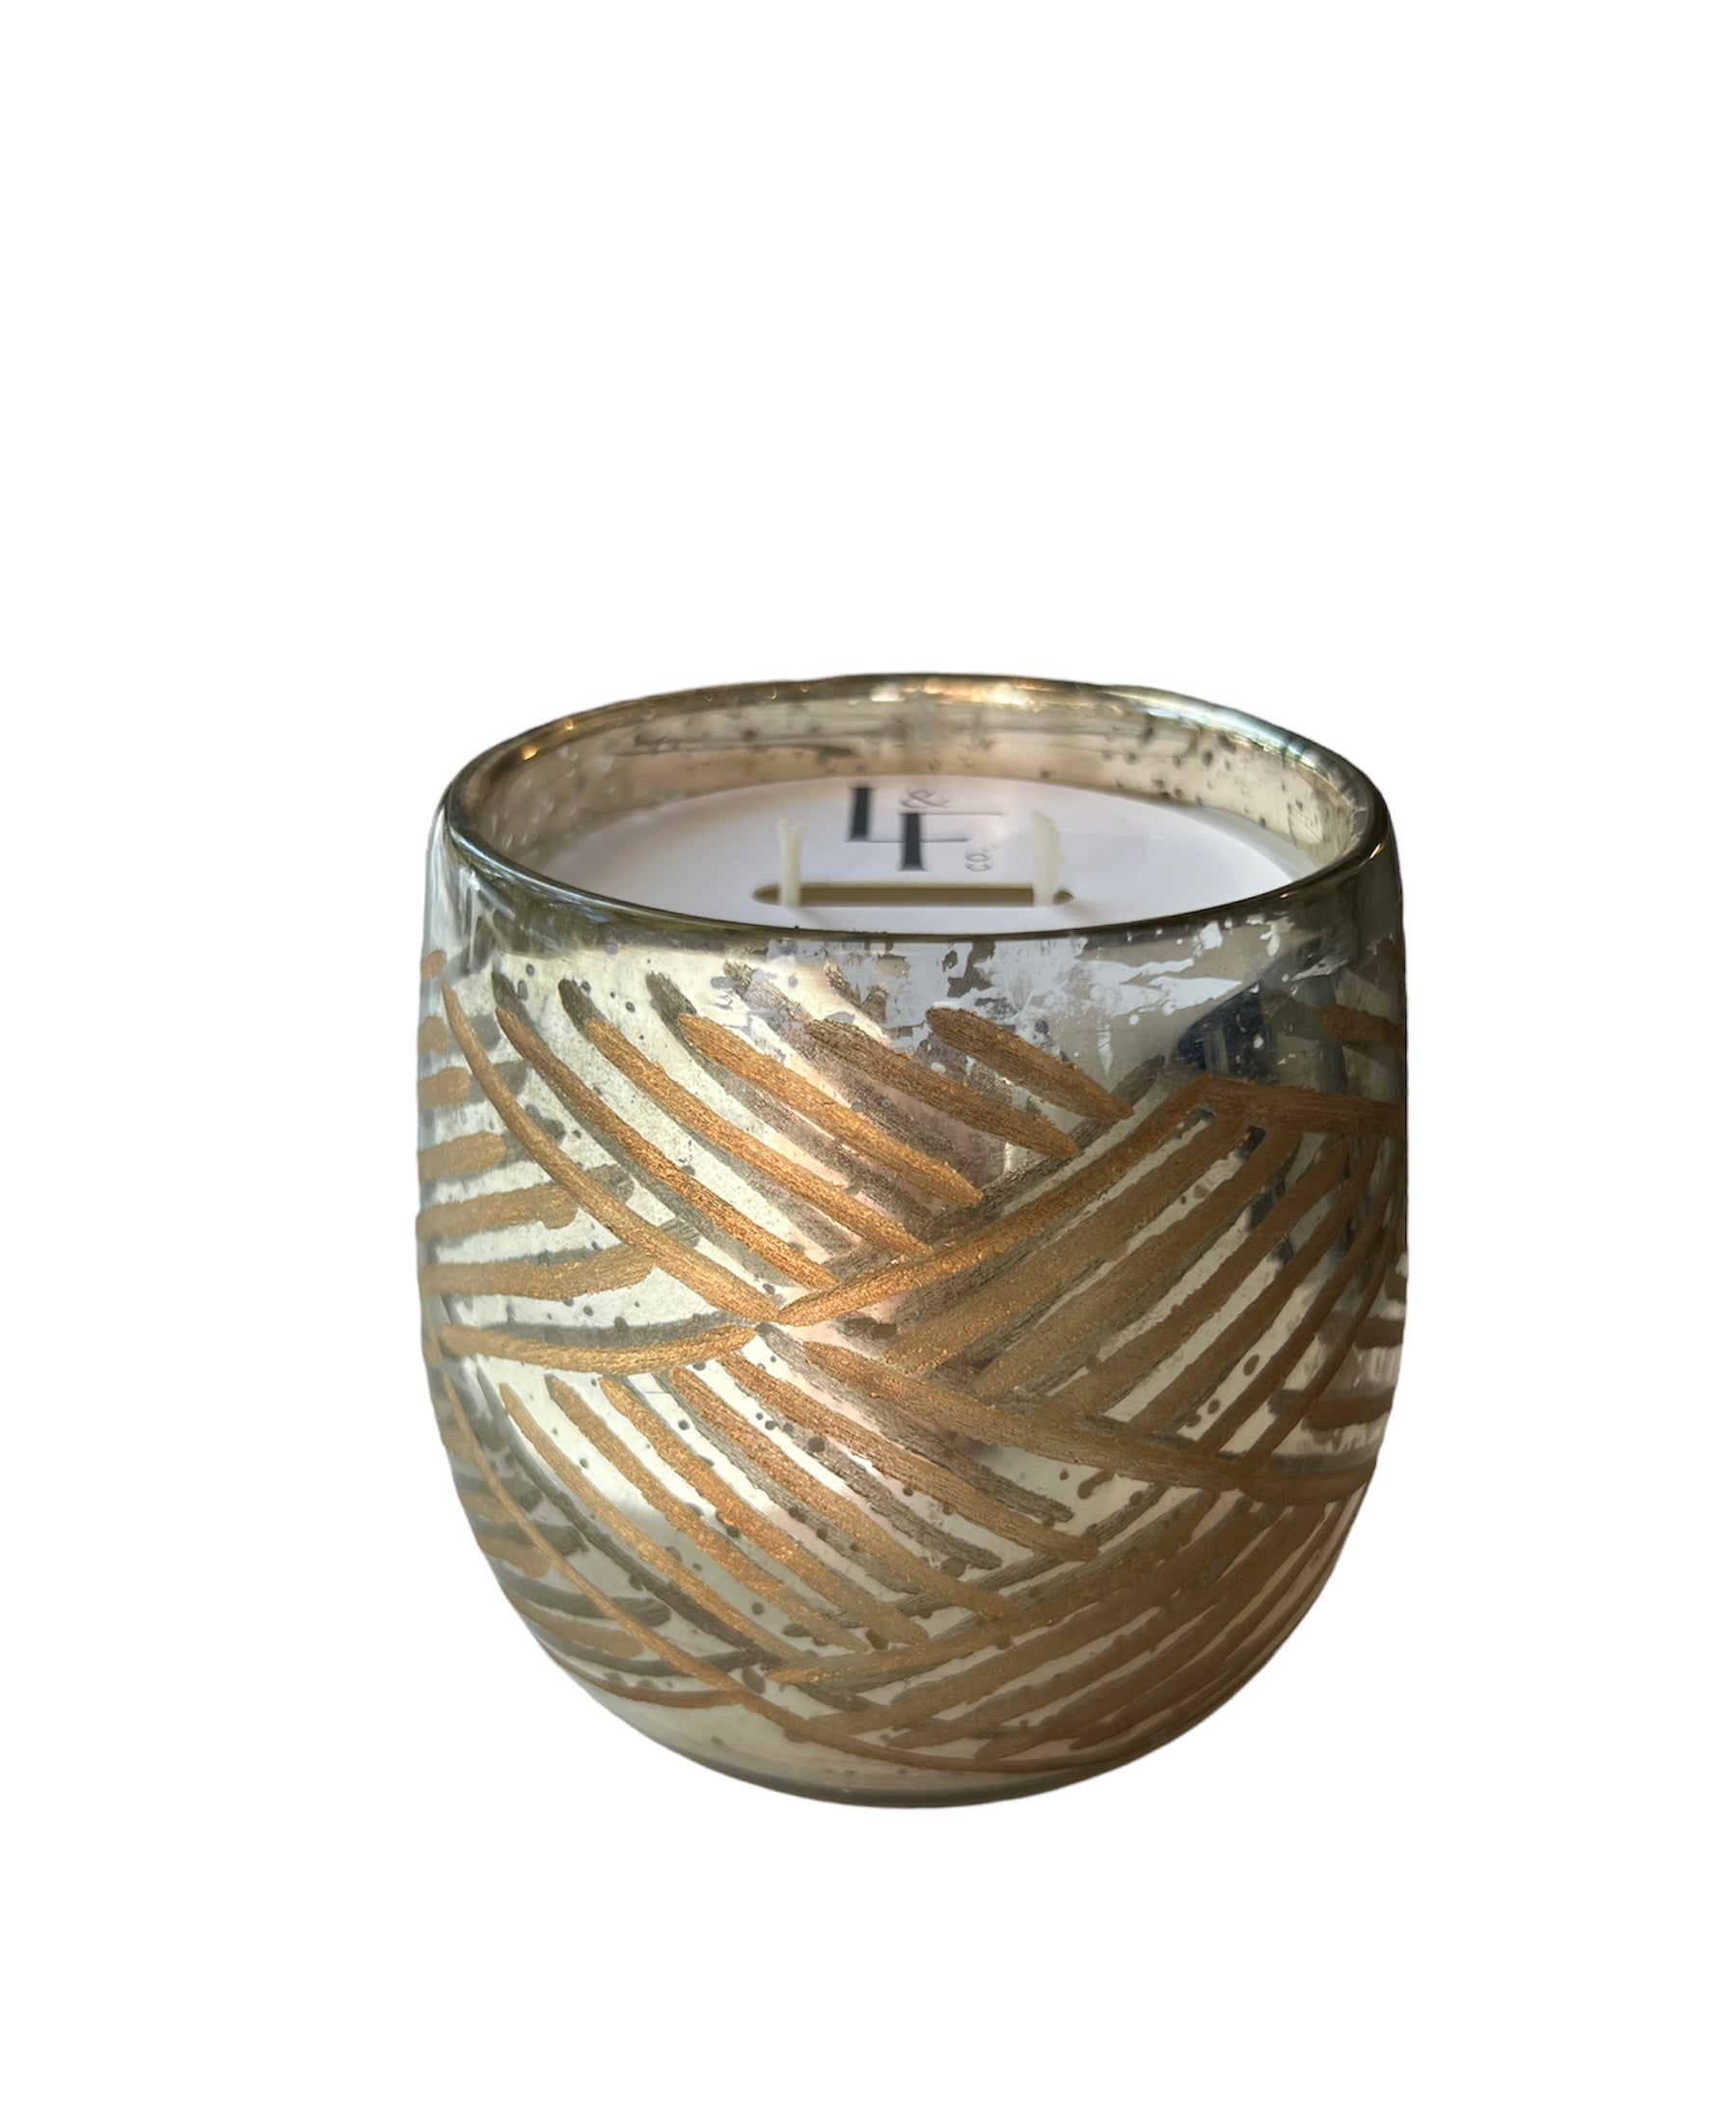 Balsam & Cedar Sanded Mercury Candle - Large